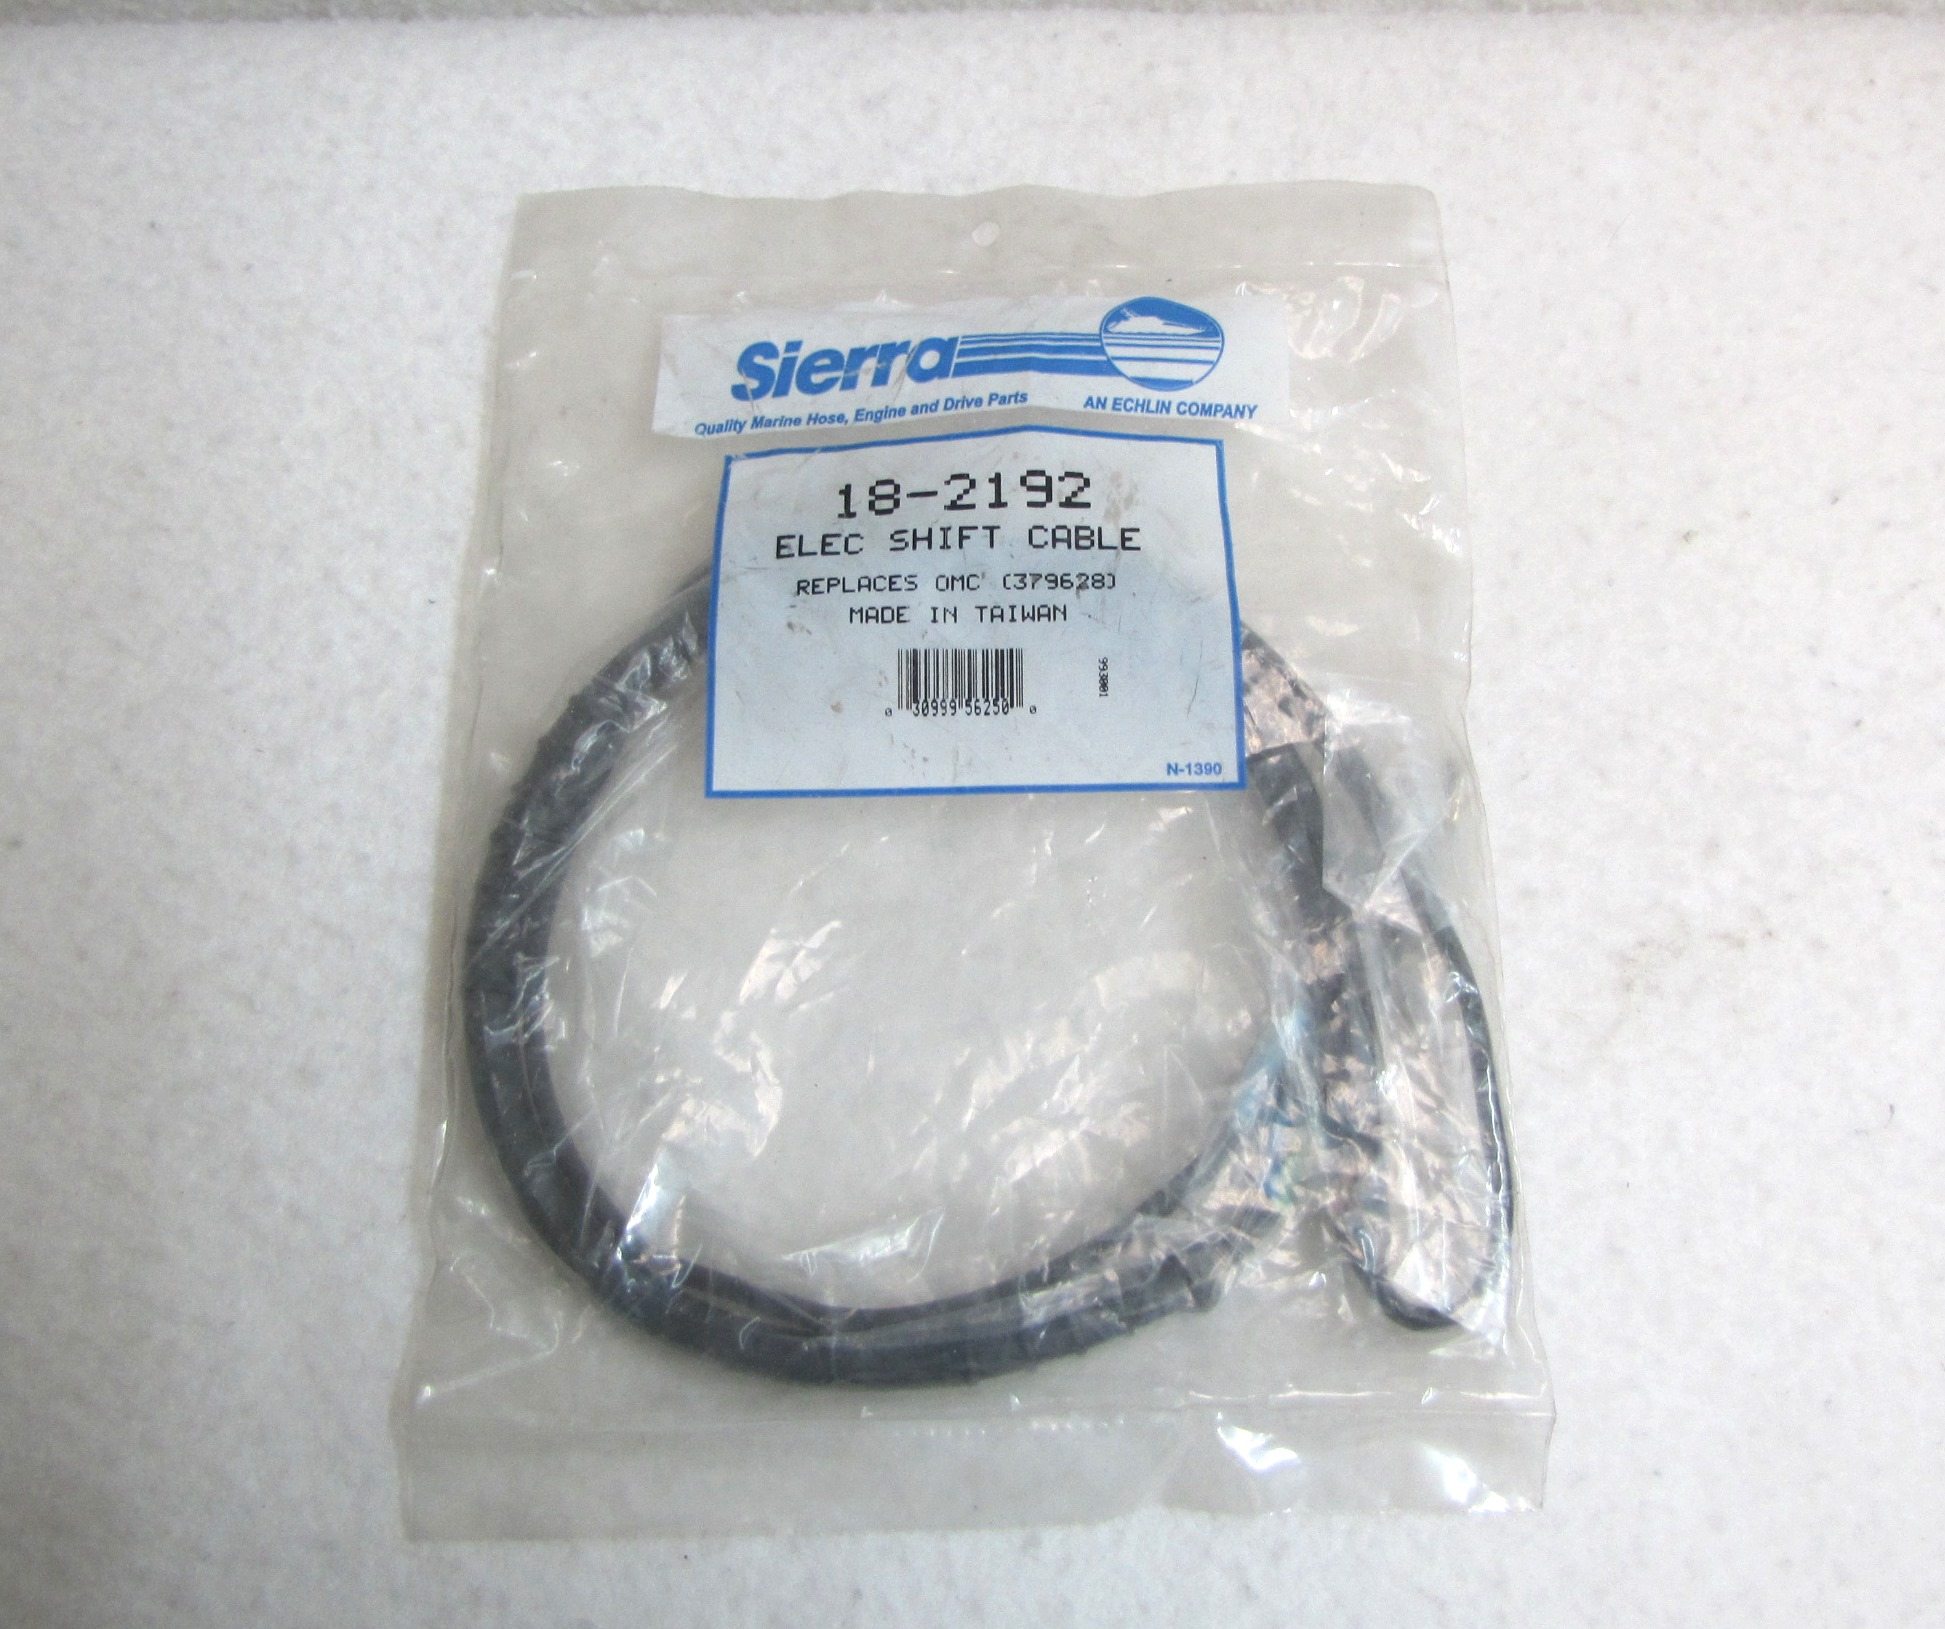 379628 OMC ELEC SHIFT CABLE Sierra 18-2192